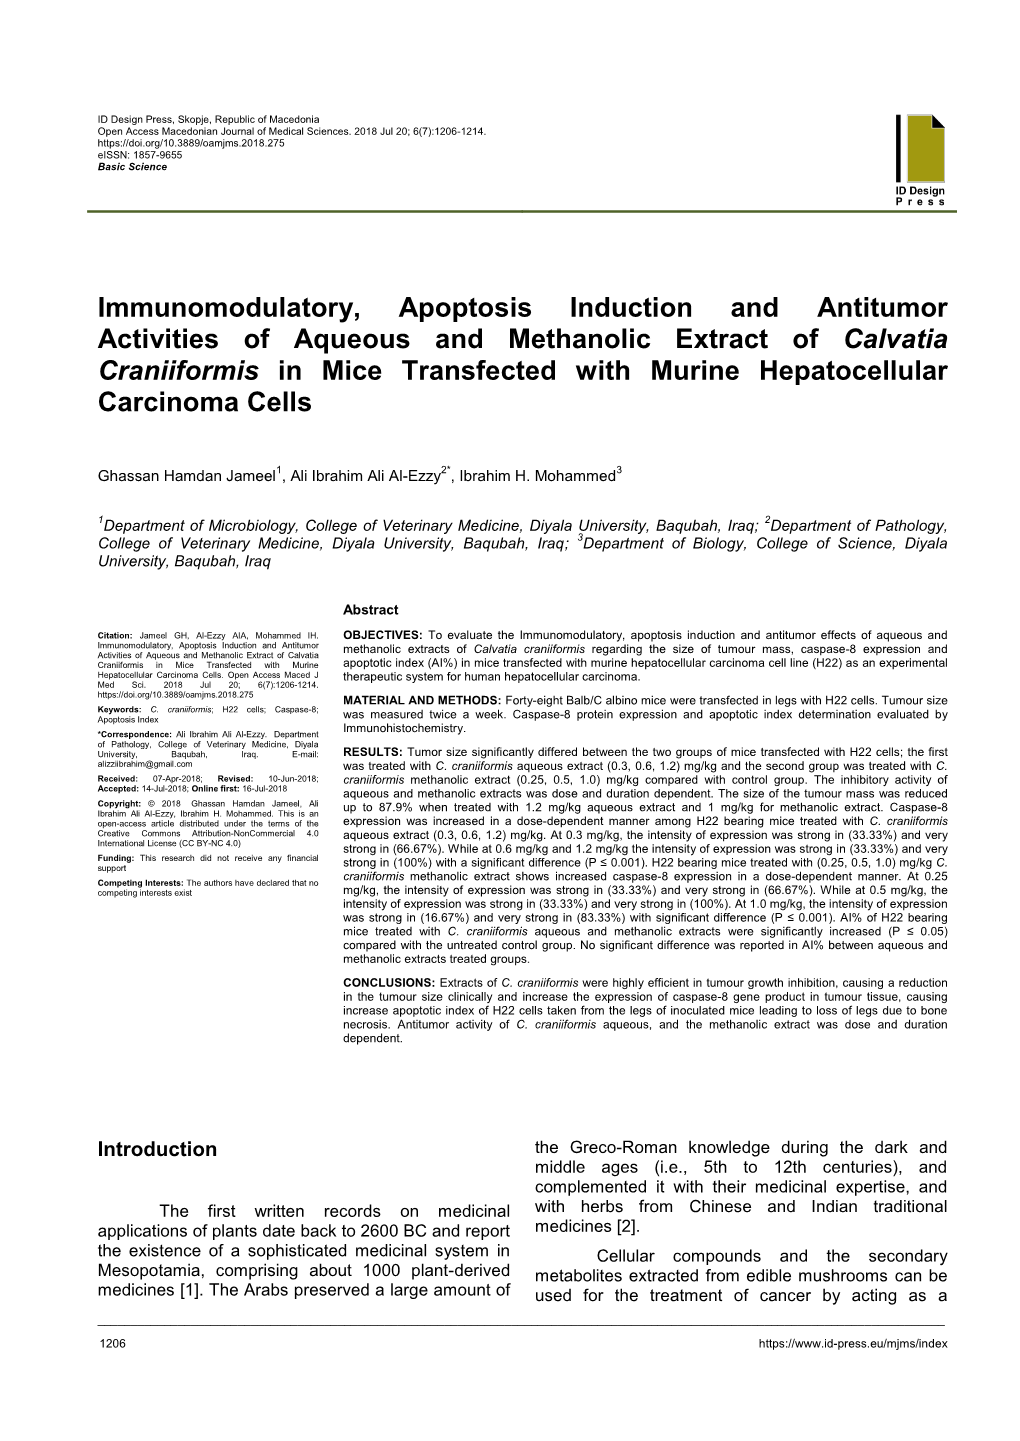 Immunomodulatory, Apoptosis Induction and Antitumor Activities of Aqueous and Methanolic Extract of Calvatia Craniiformis In